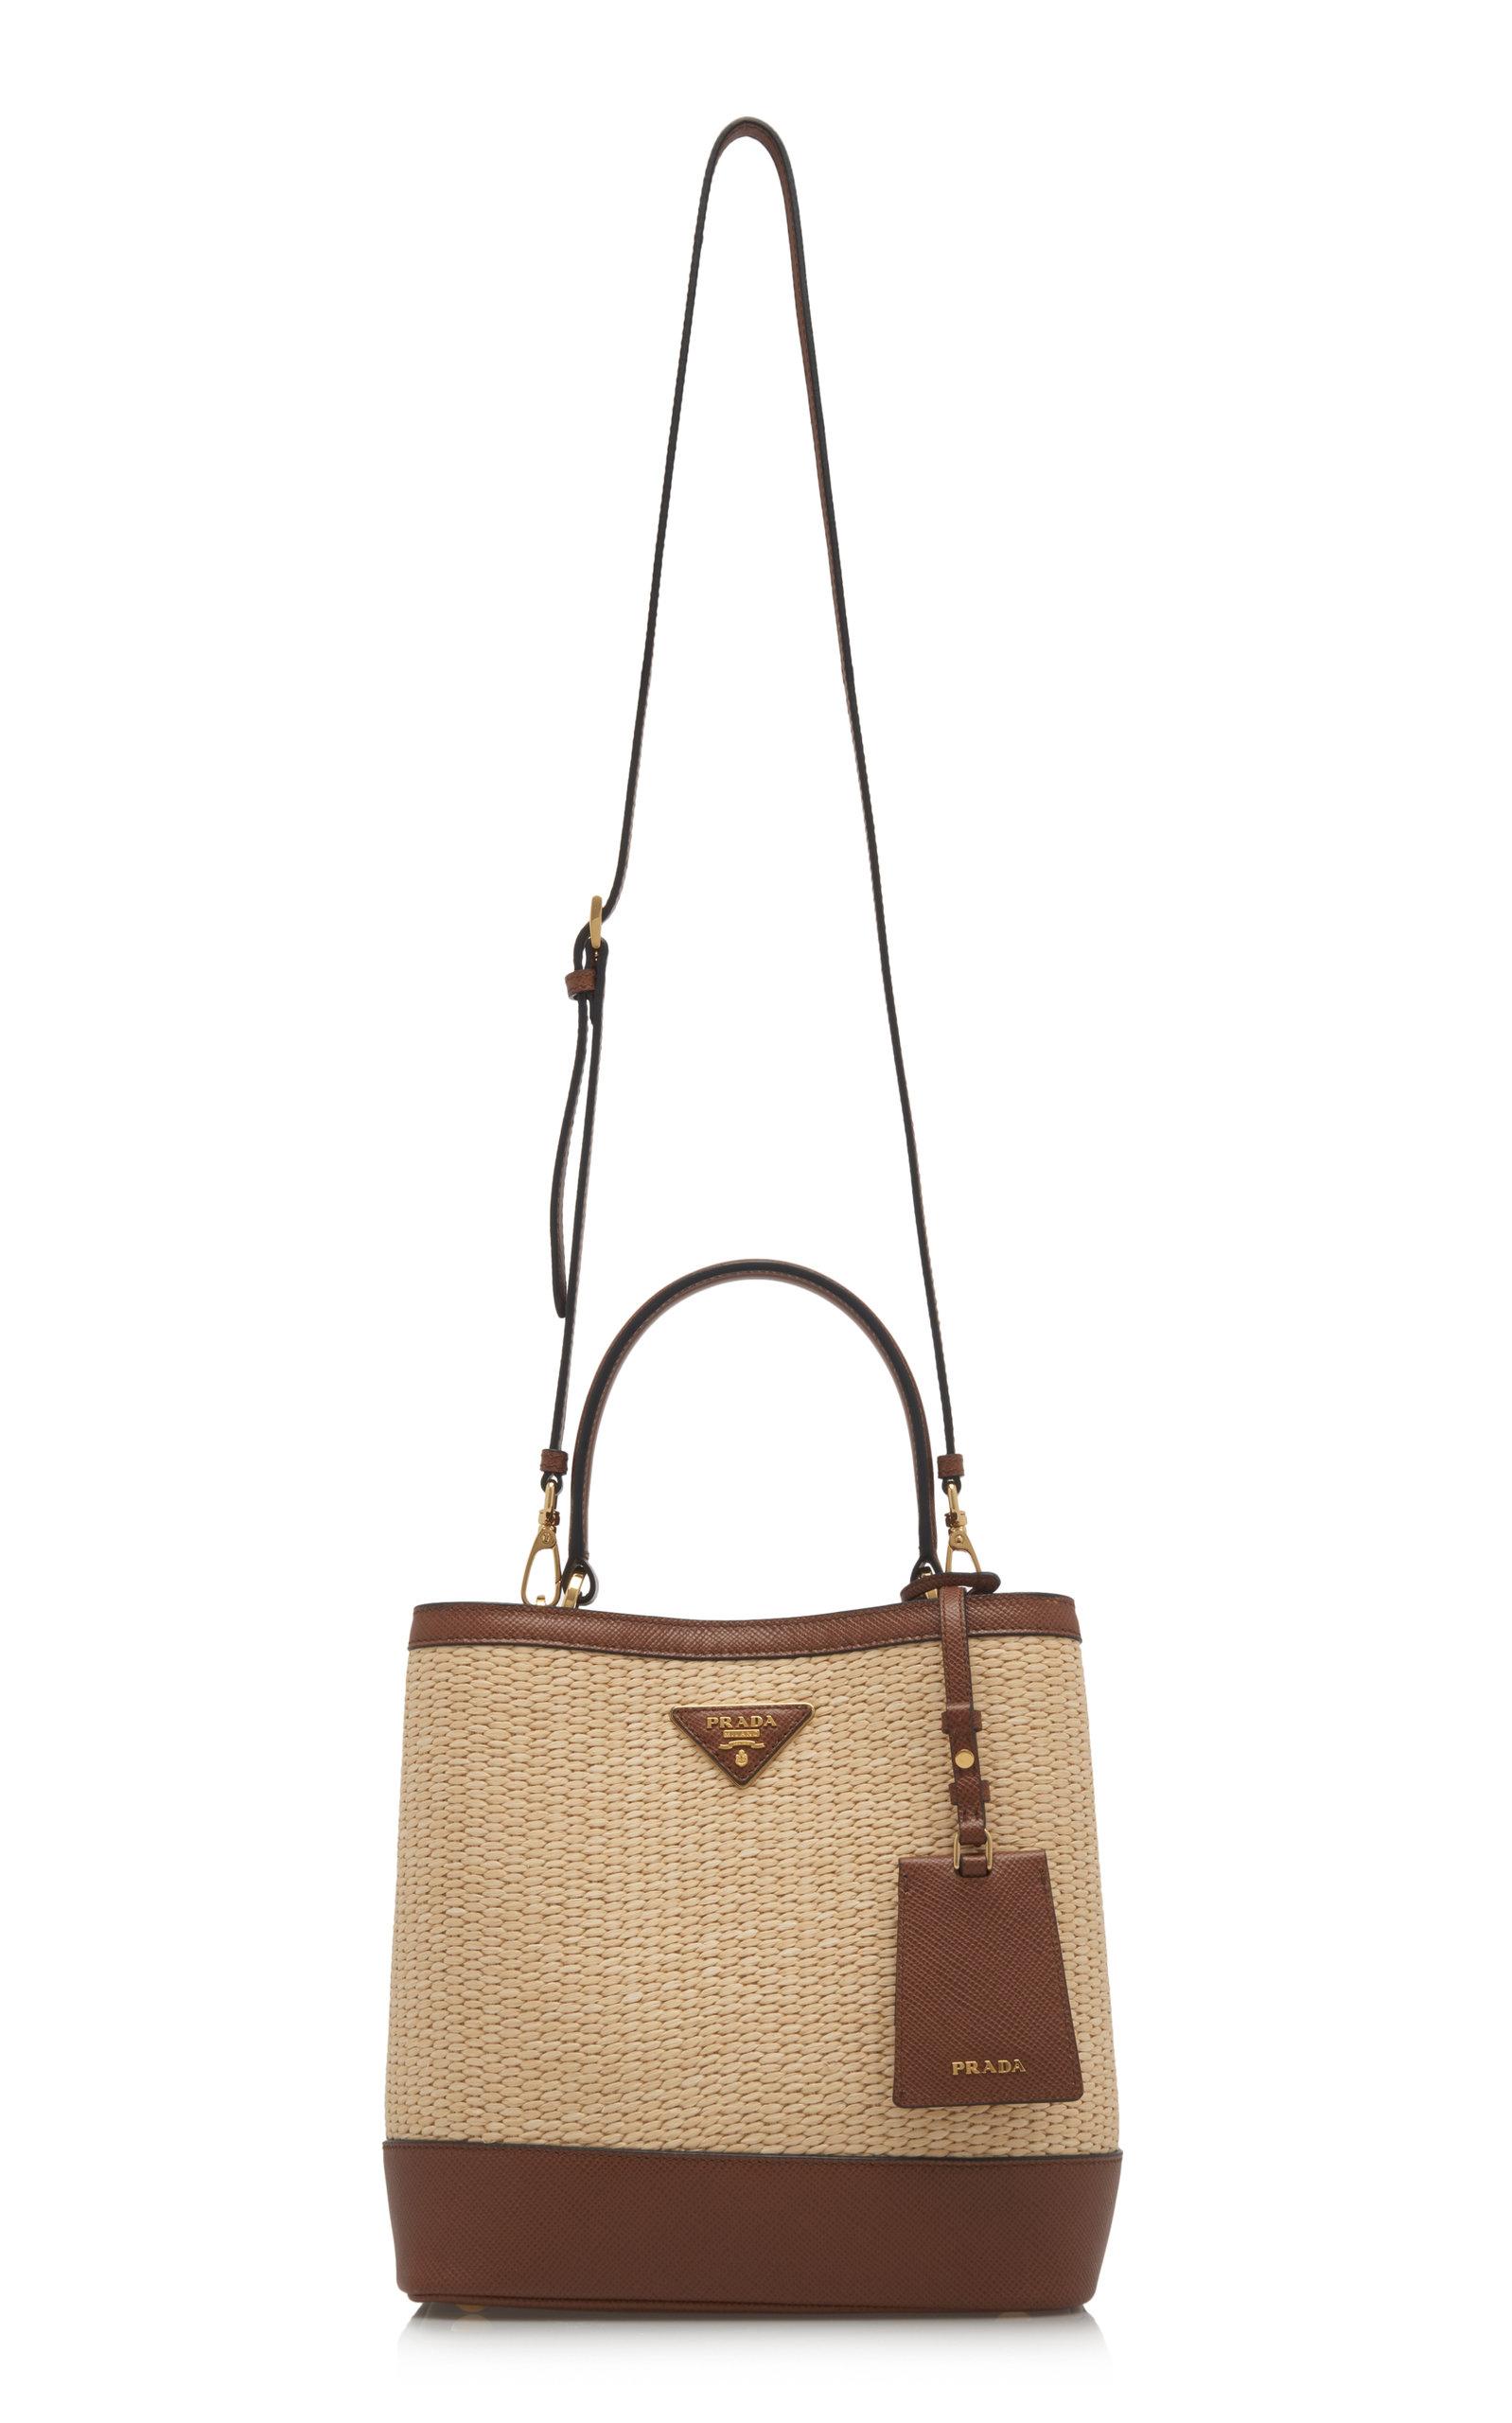 Prada Medium Raffia And Saffiano Leather Double Bucket Bag in Brown - Lyst